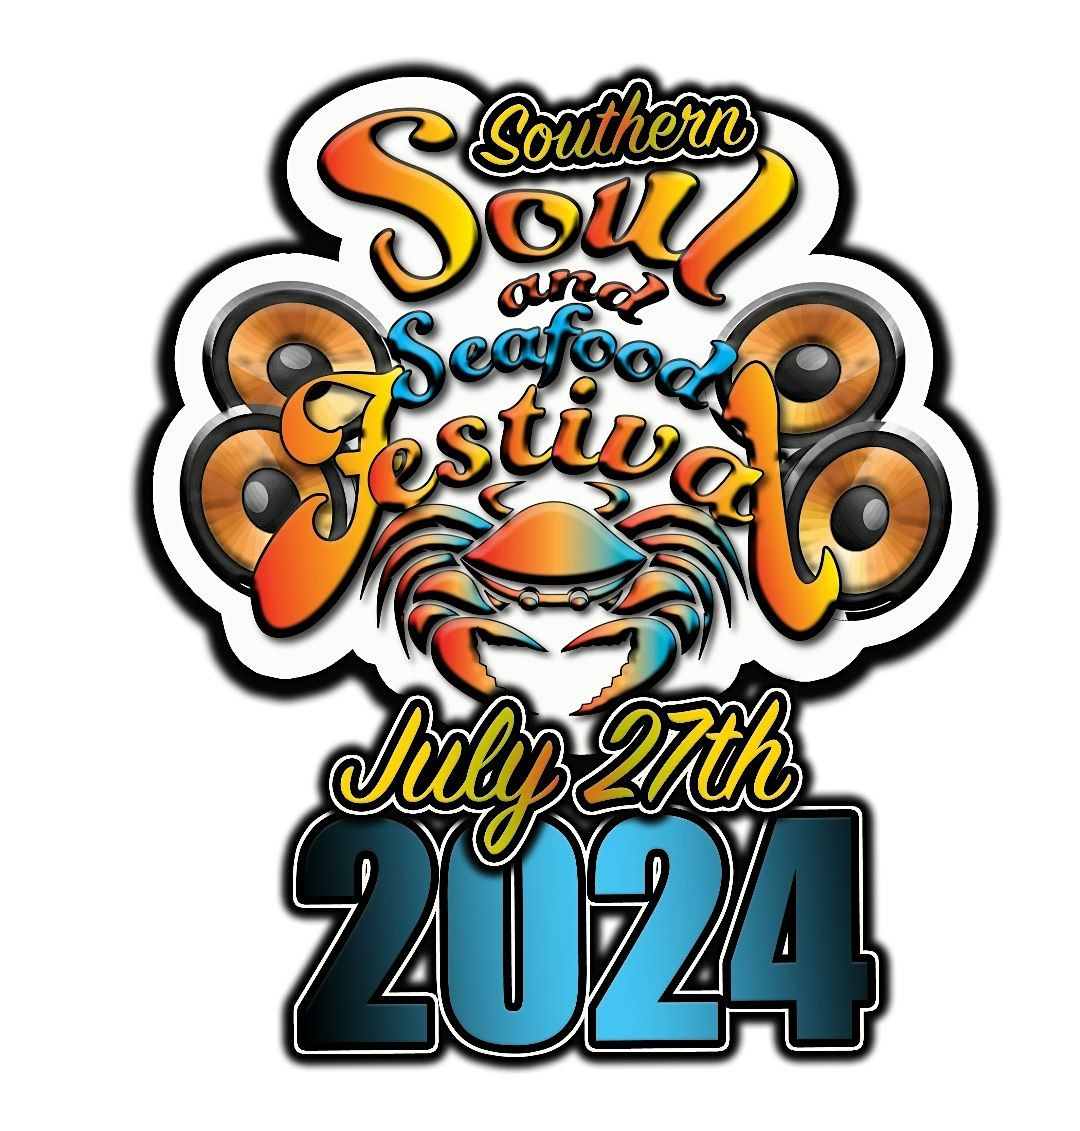 Southern Soul Food Surf& Turf Festival